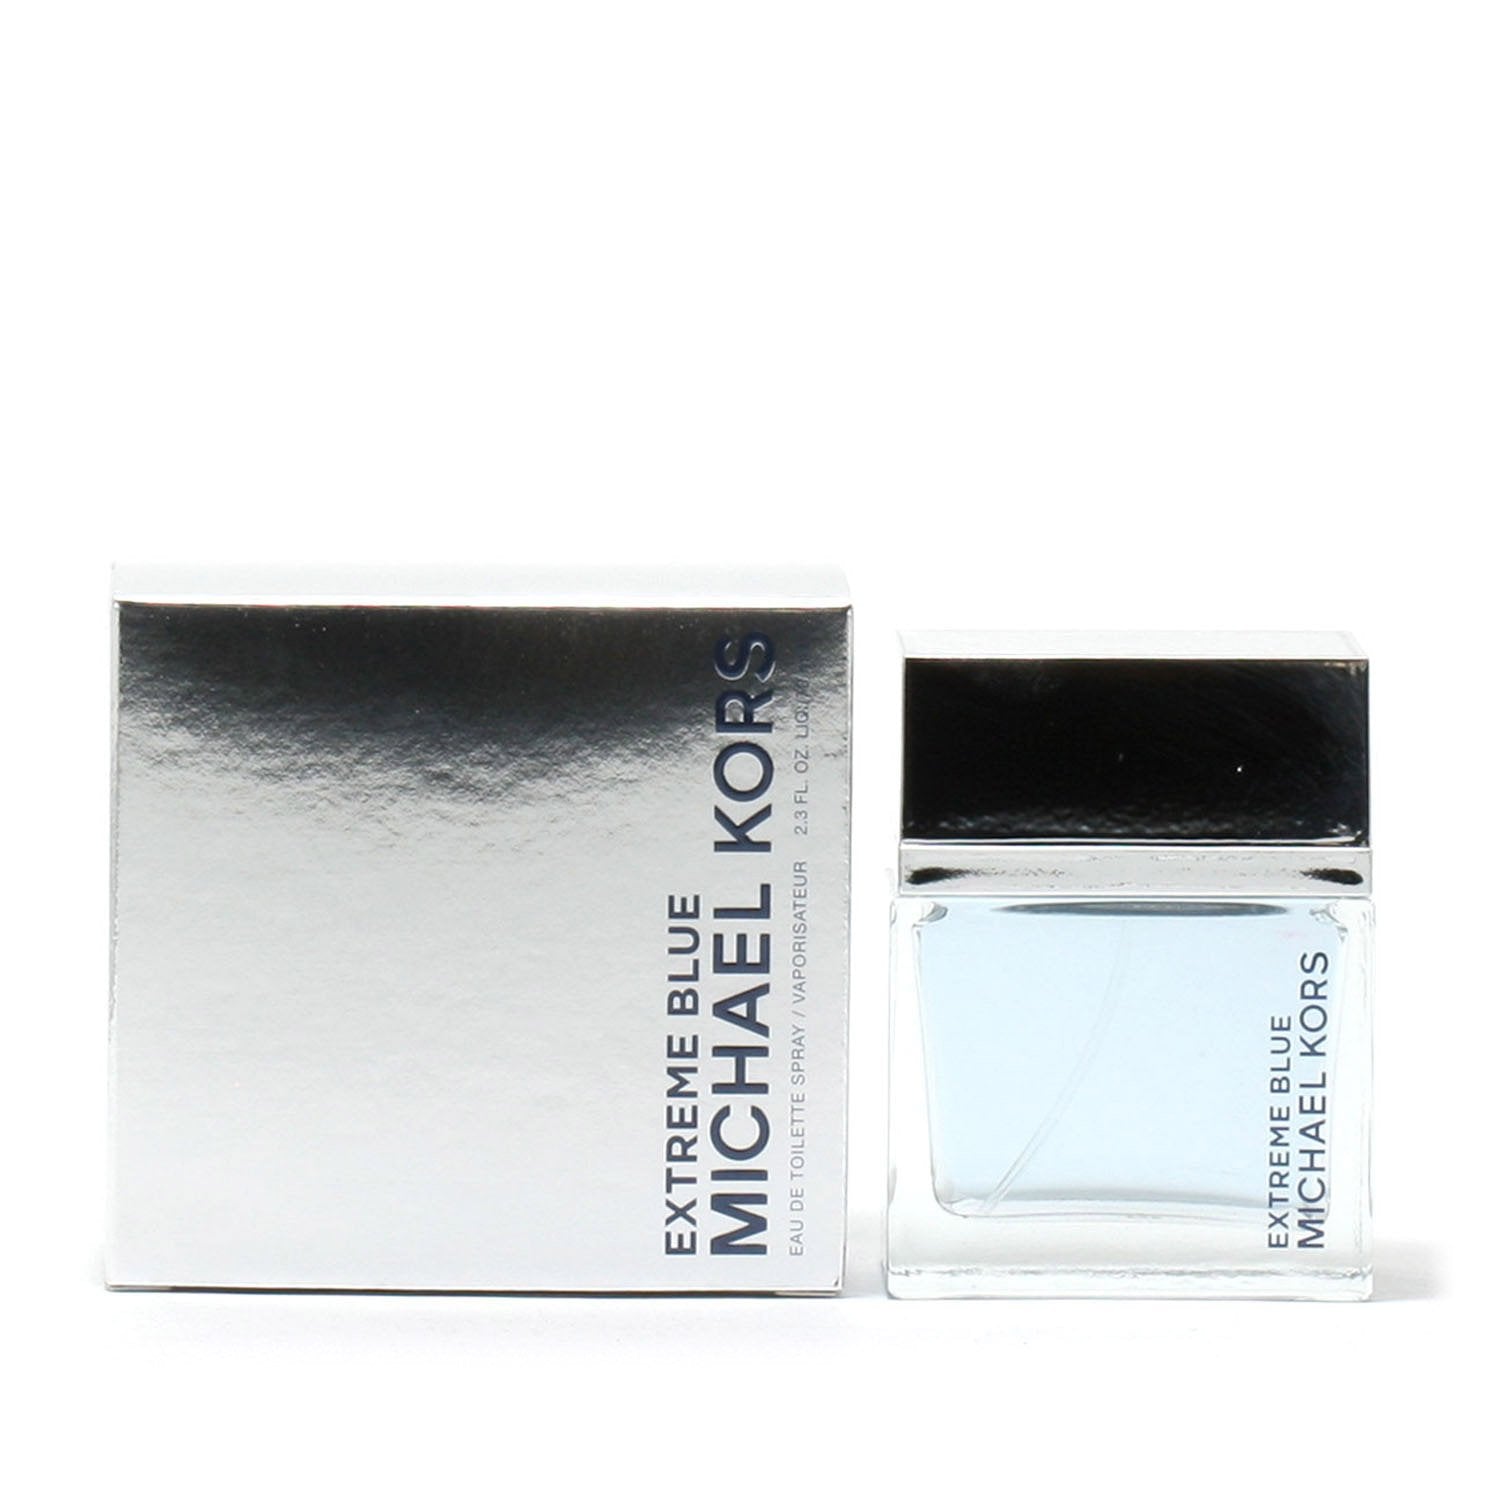 MICHAEL KORS EXTREME BLUE FOR MEN - EAU DE TOILETTE SPRAY – Fragrance Room